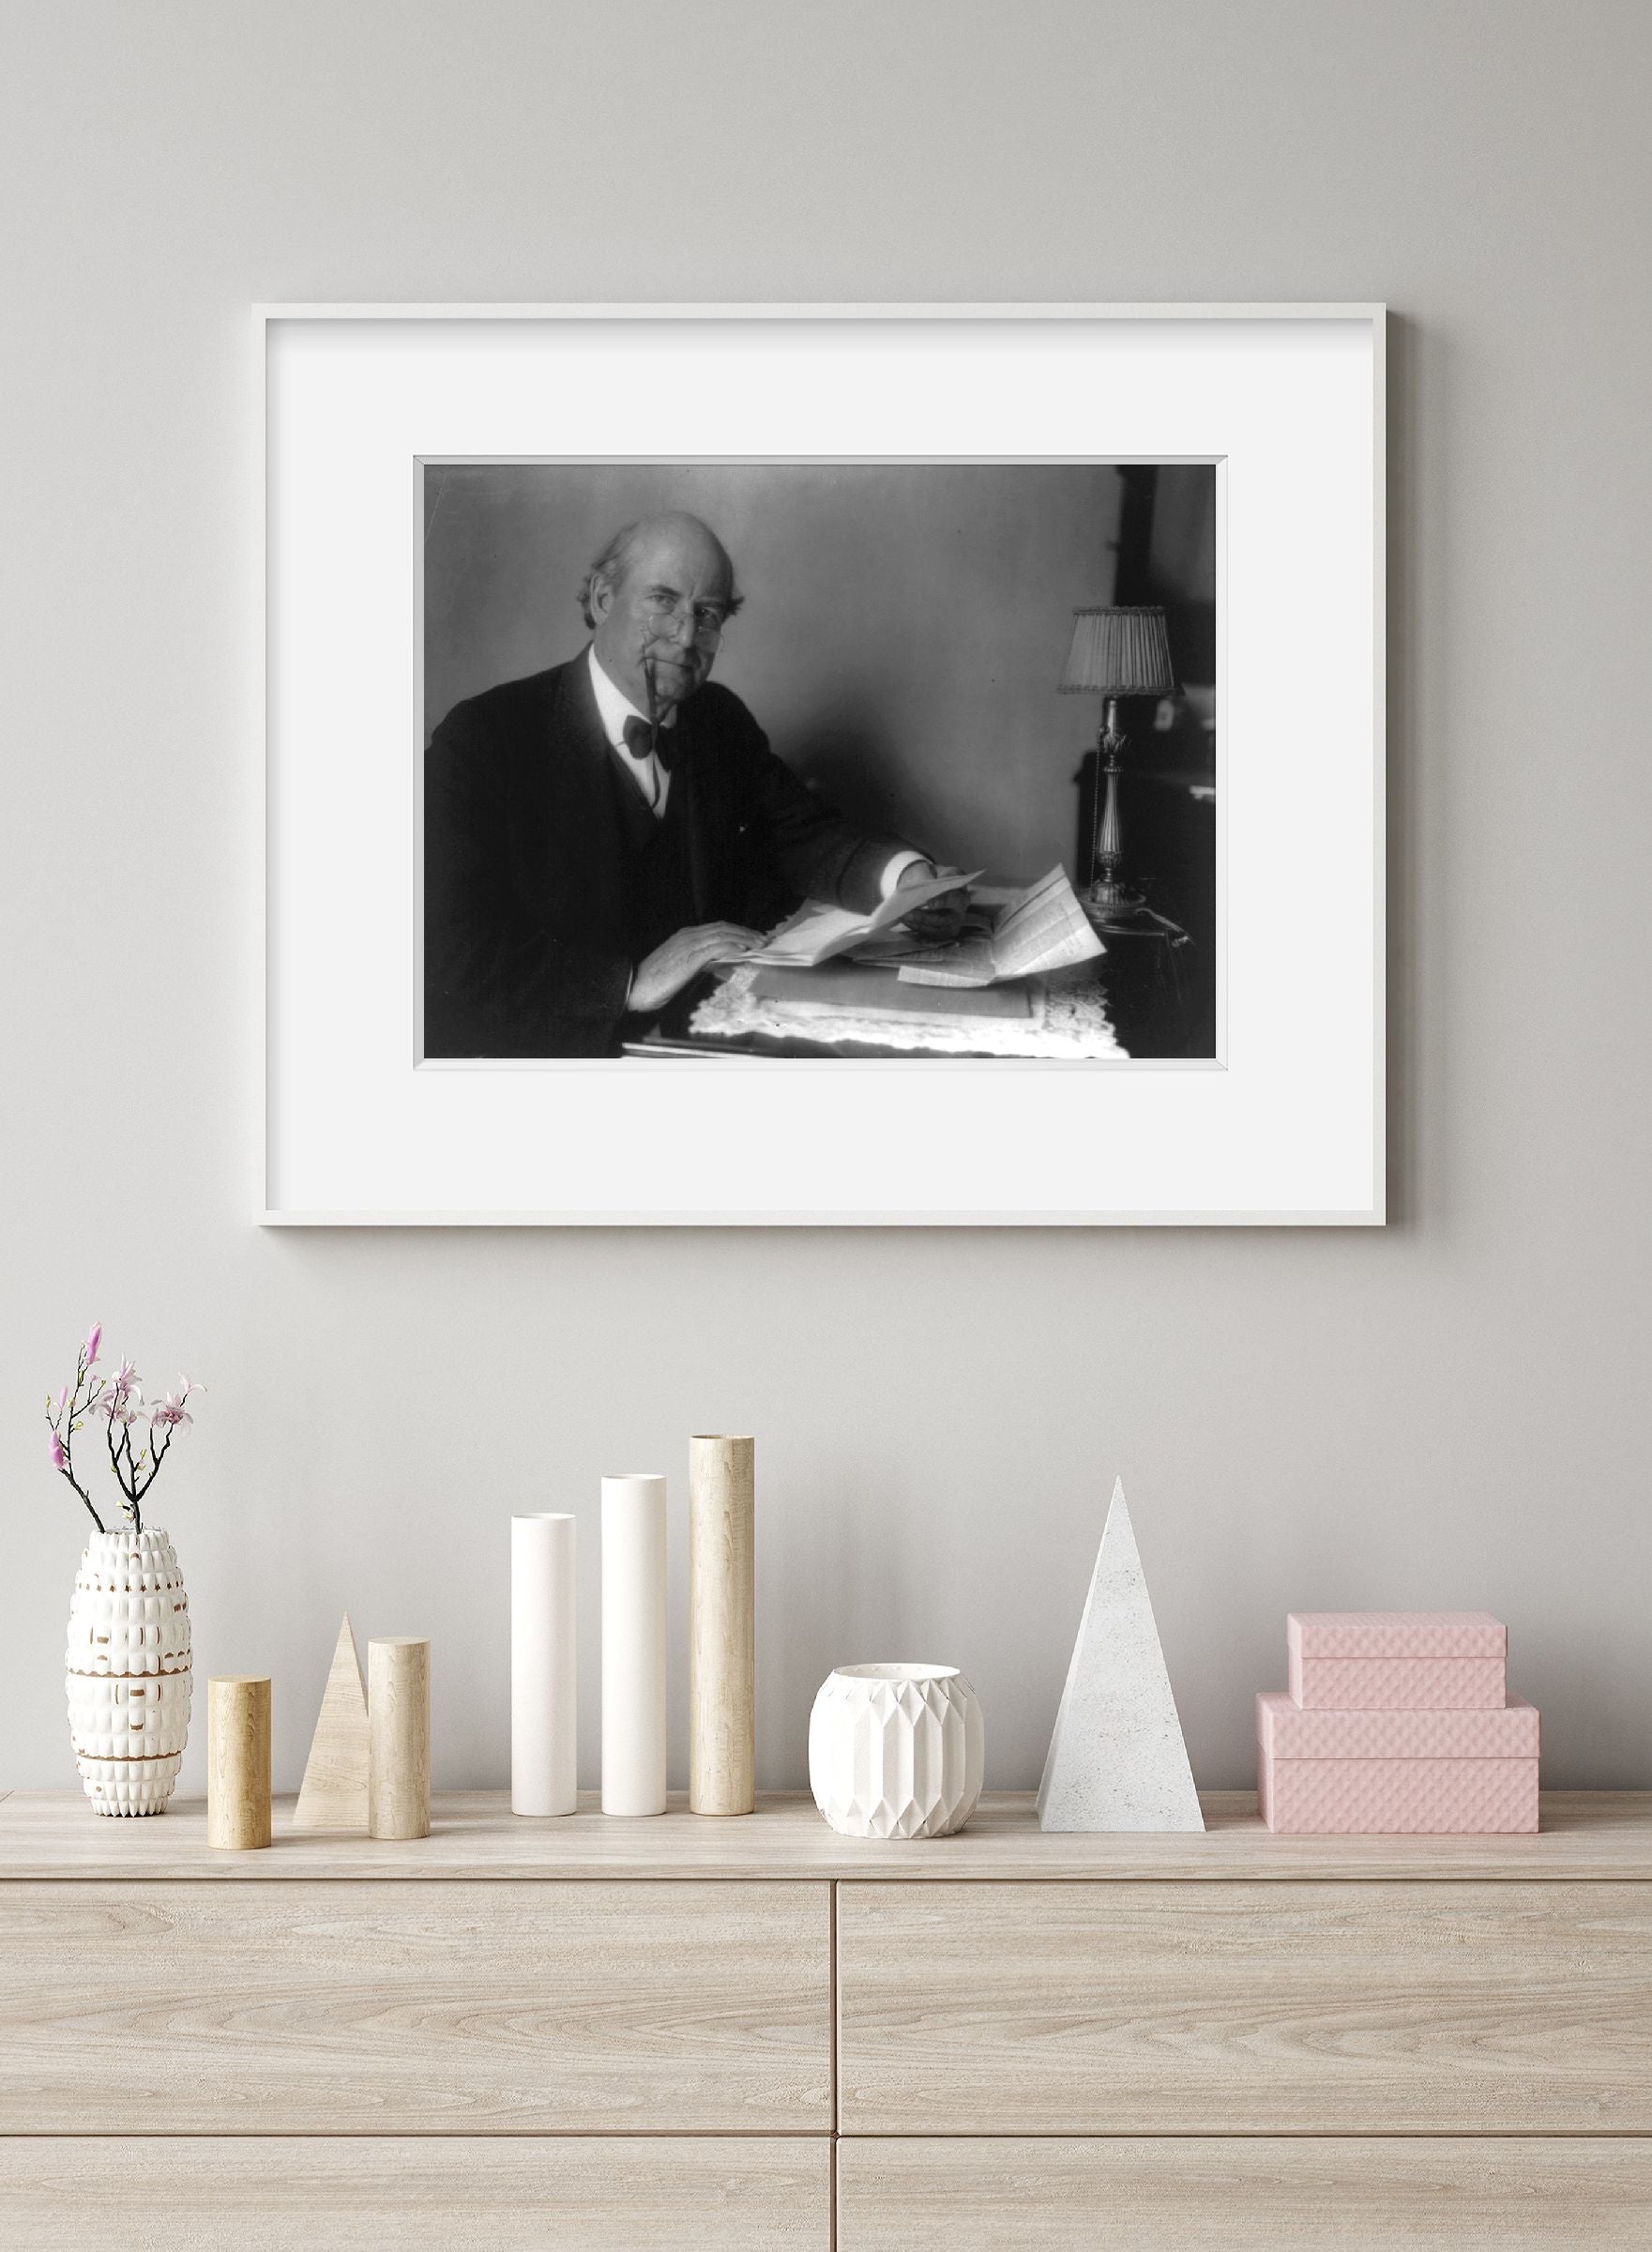 ca. 191- photograph of William Jennings Bryan, 1860-1925, half, seated at desk,